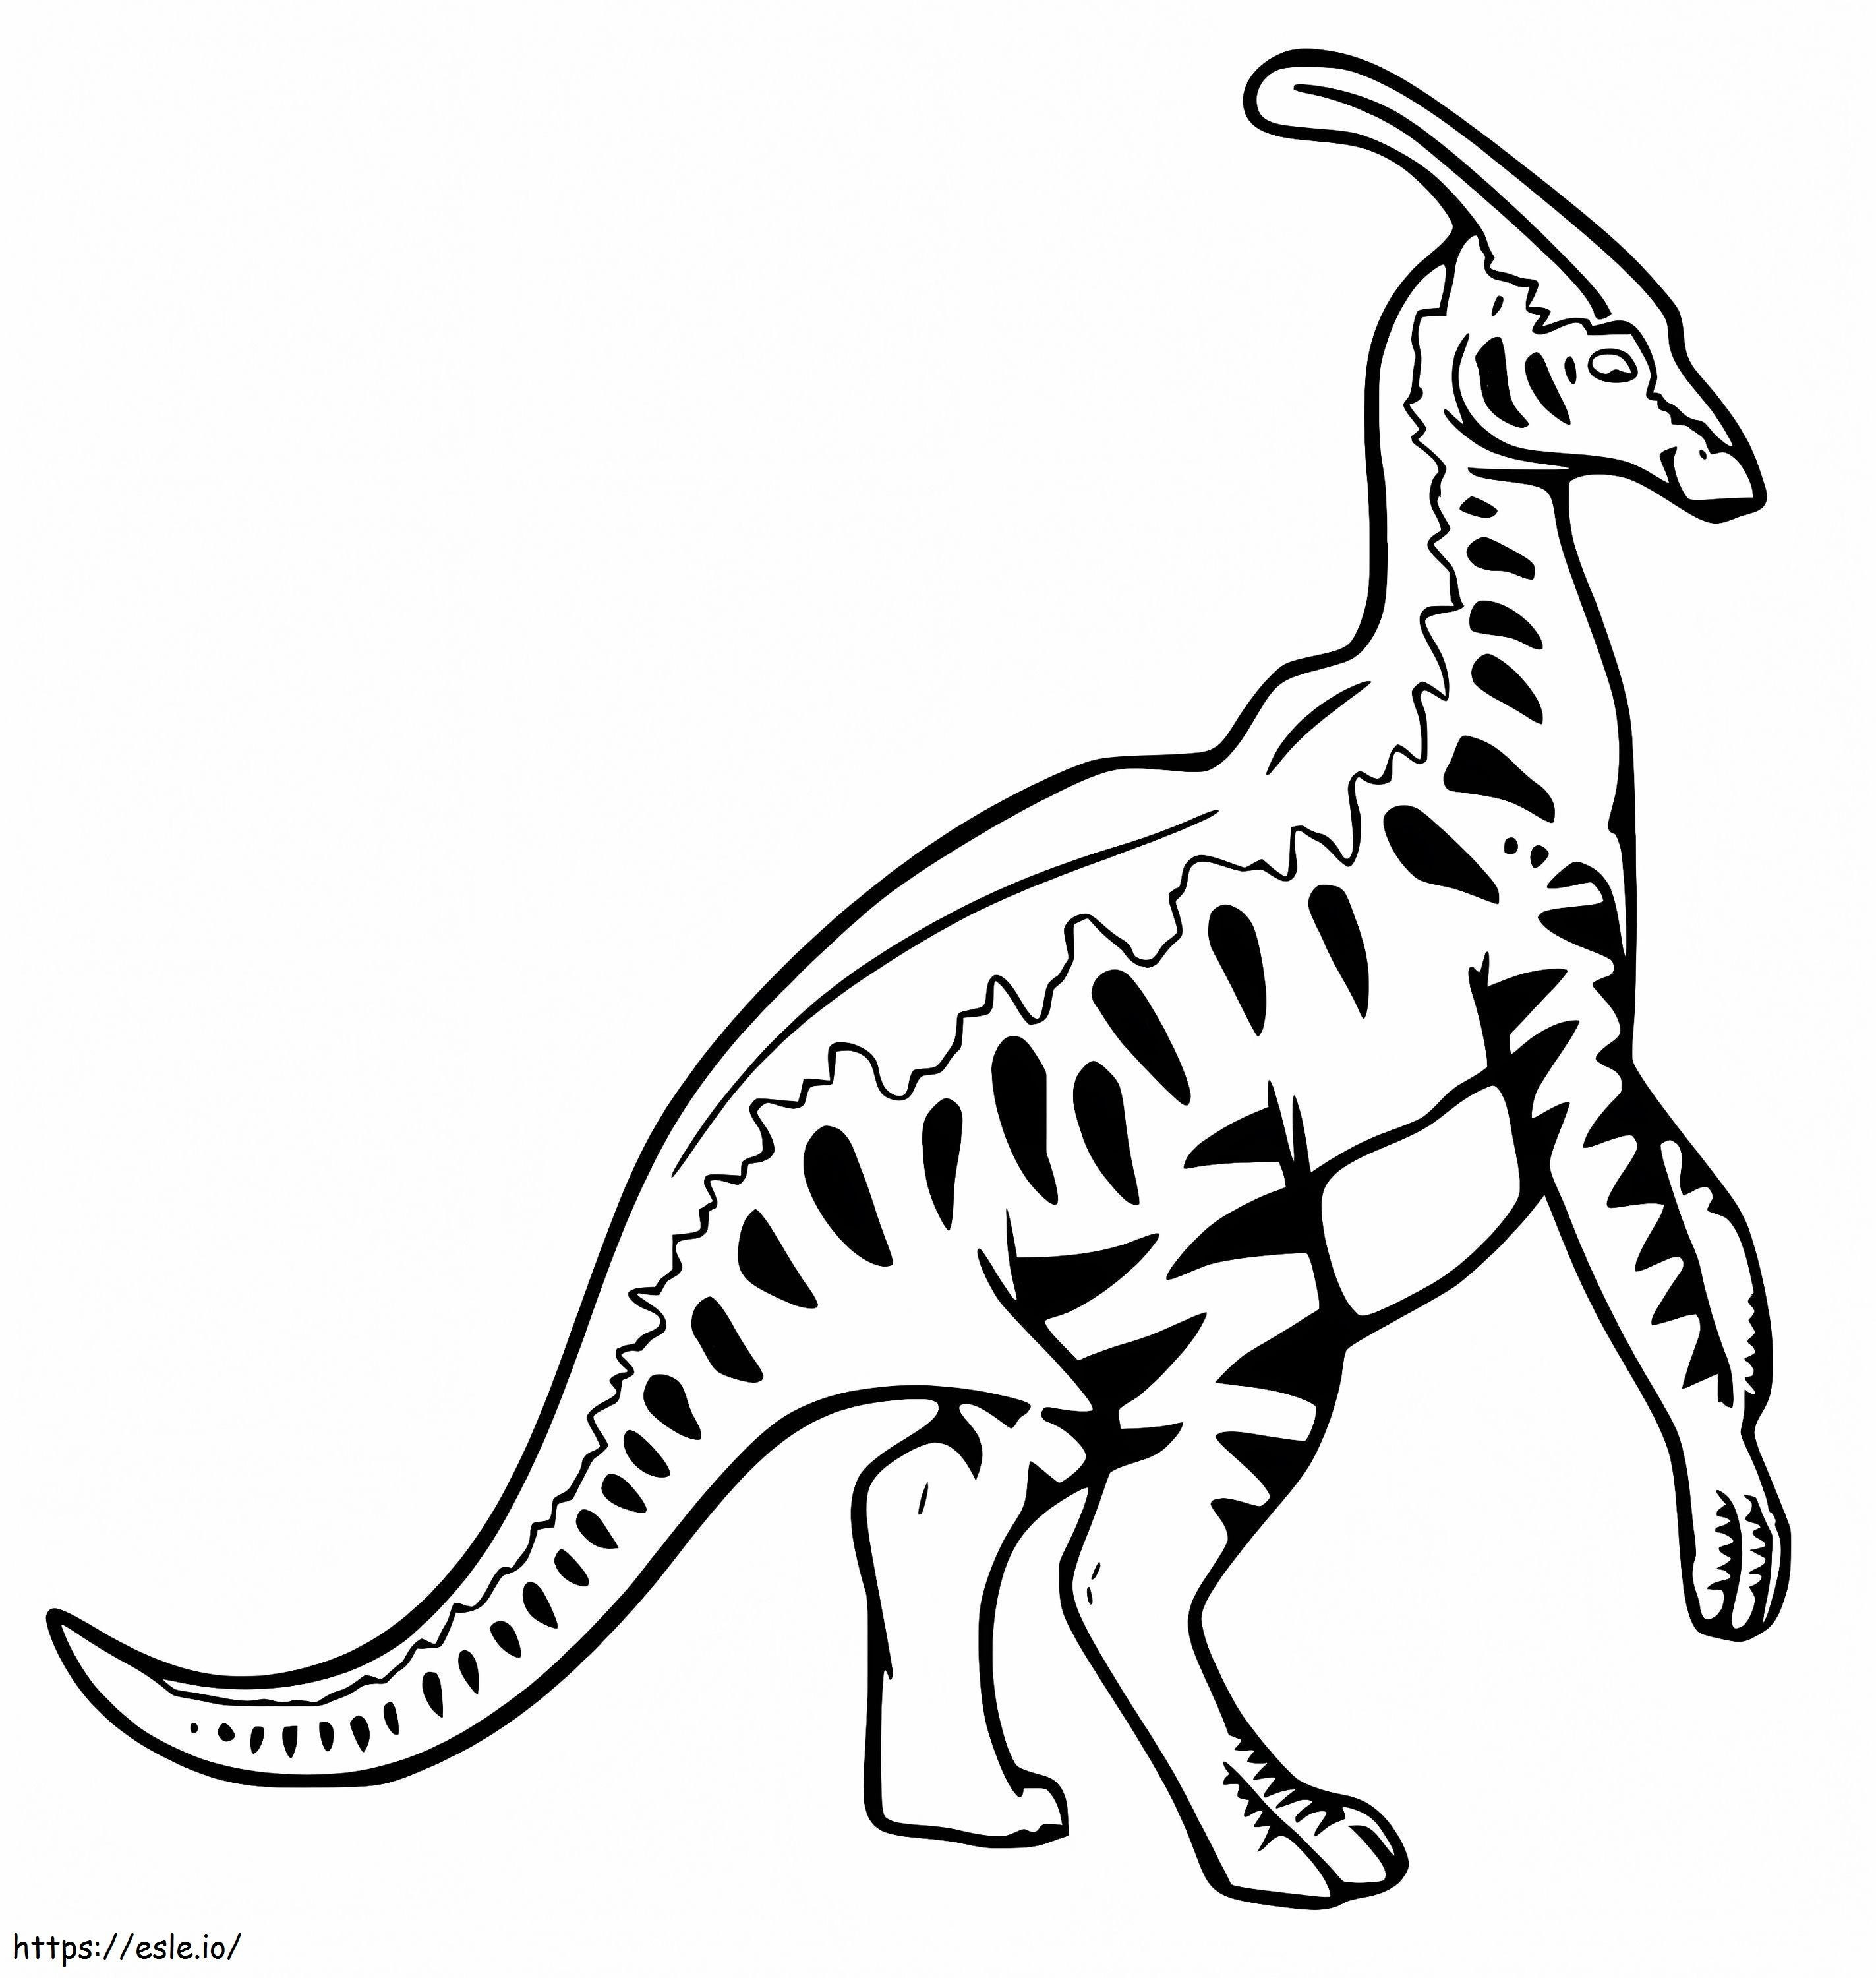 Parasaurolophus 6 ausmalbilder